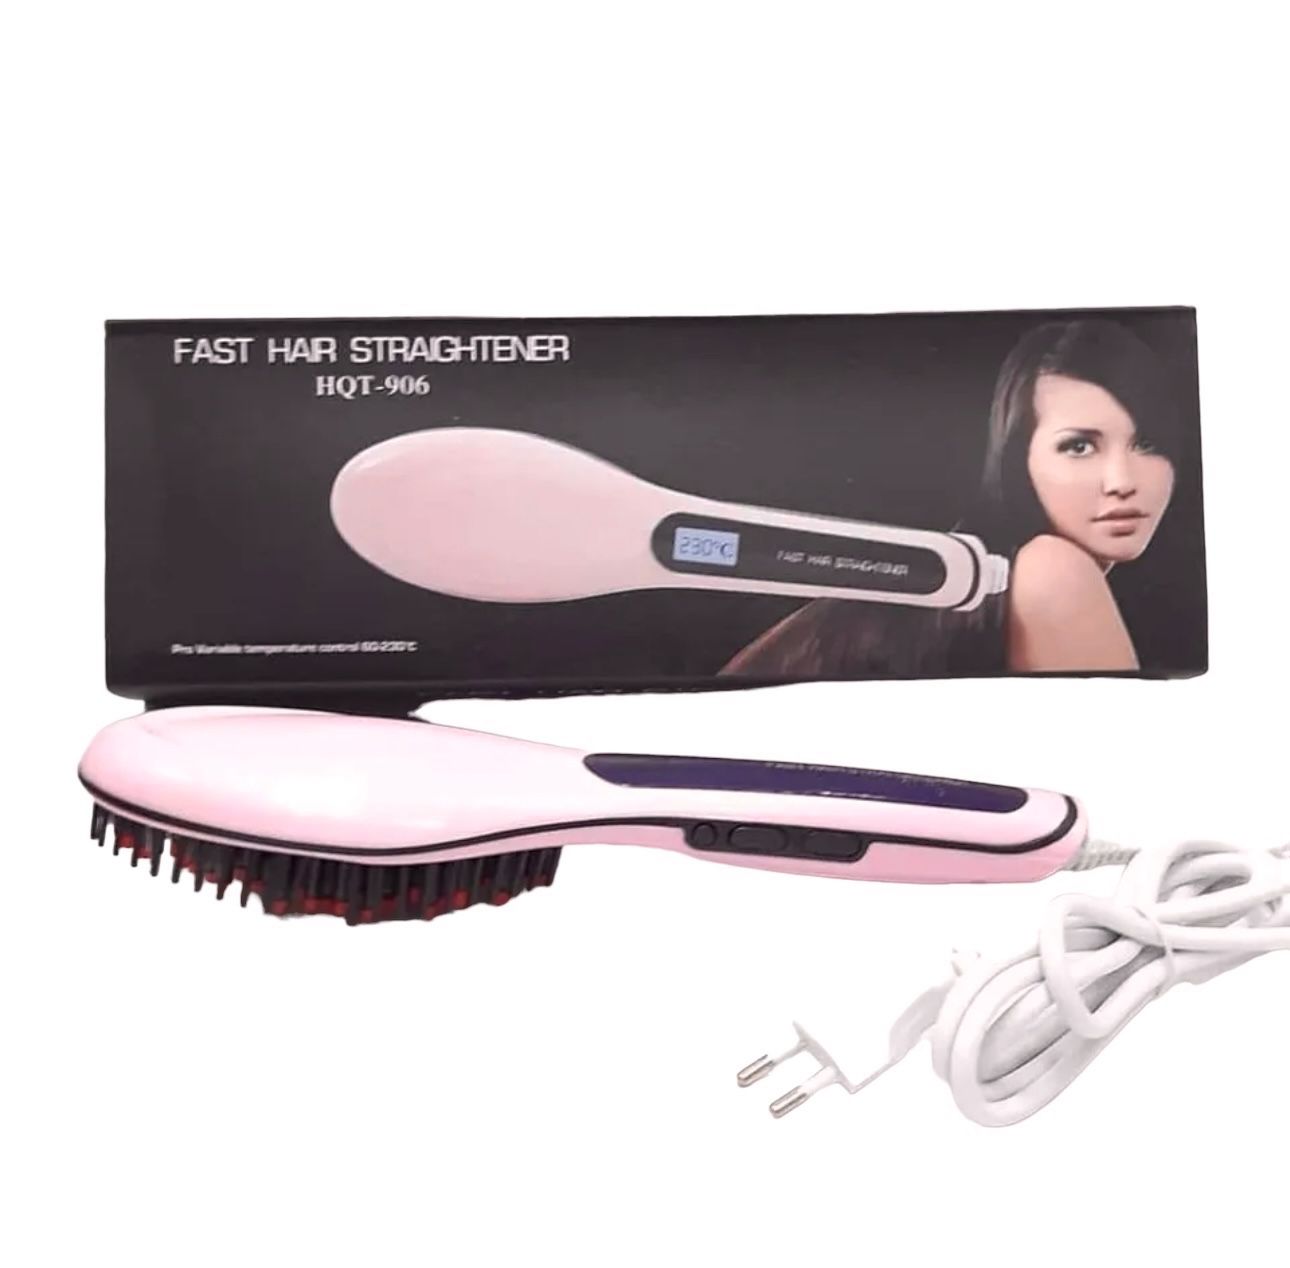 NWT Fast Hair Straightener HQT-906 Pink